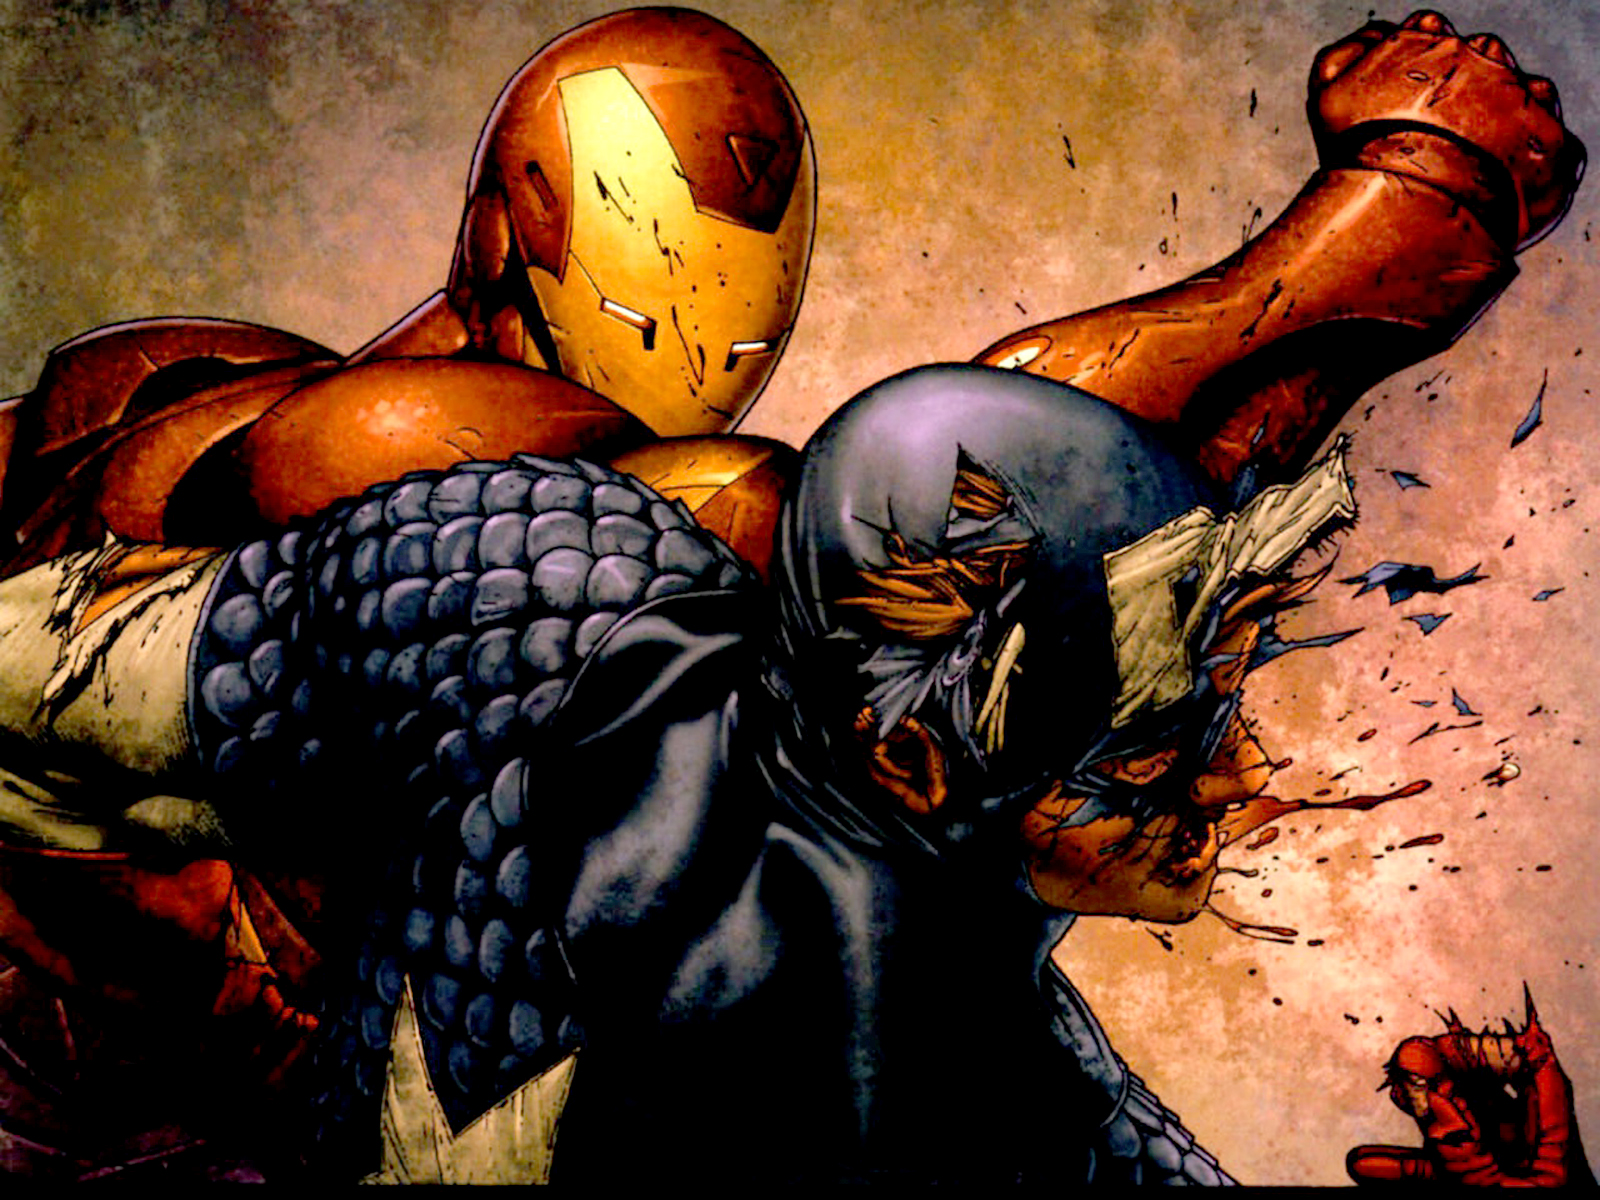 https://blogger.googleusercontent.com/img/b/R29vZ2xl/AVvXsEiXguxAOAaTg0NB8G9yWwFOQOrXAcPP6lVS51NRyZfc8rrWbwBScmQLZQX8QwX0kSOb1qnThZrMrY7wevWRDMbjyOaoM5VI4oEeq7ba5M2TYAAWJCmi7ux4wCTAXV079oHaz3YUbHKbzno/s1600/Iron_Man_vs_Captain_America_HD_Comics_Wallpaper.jpg